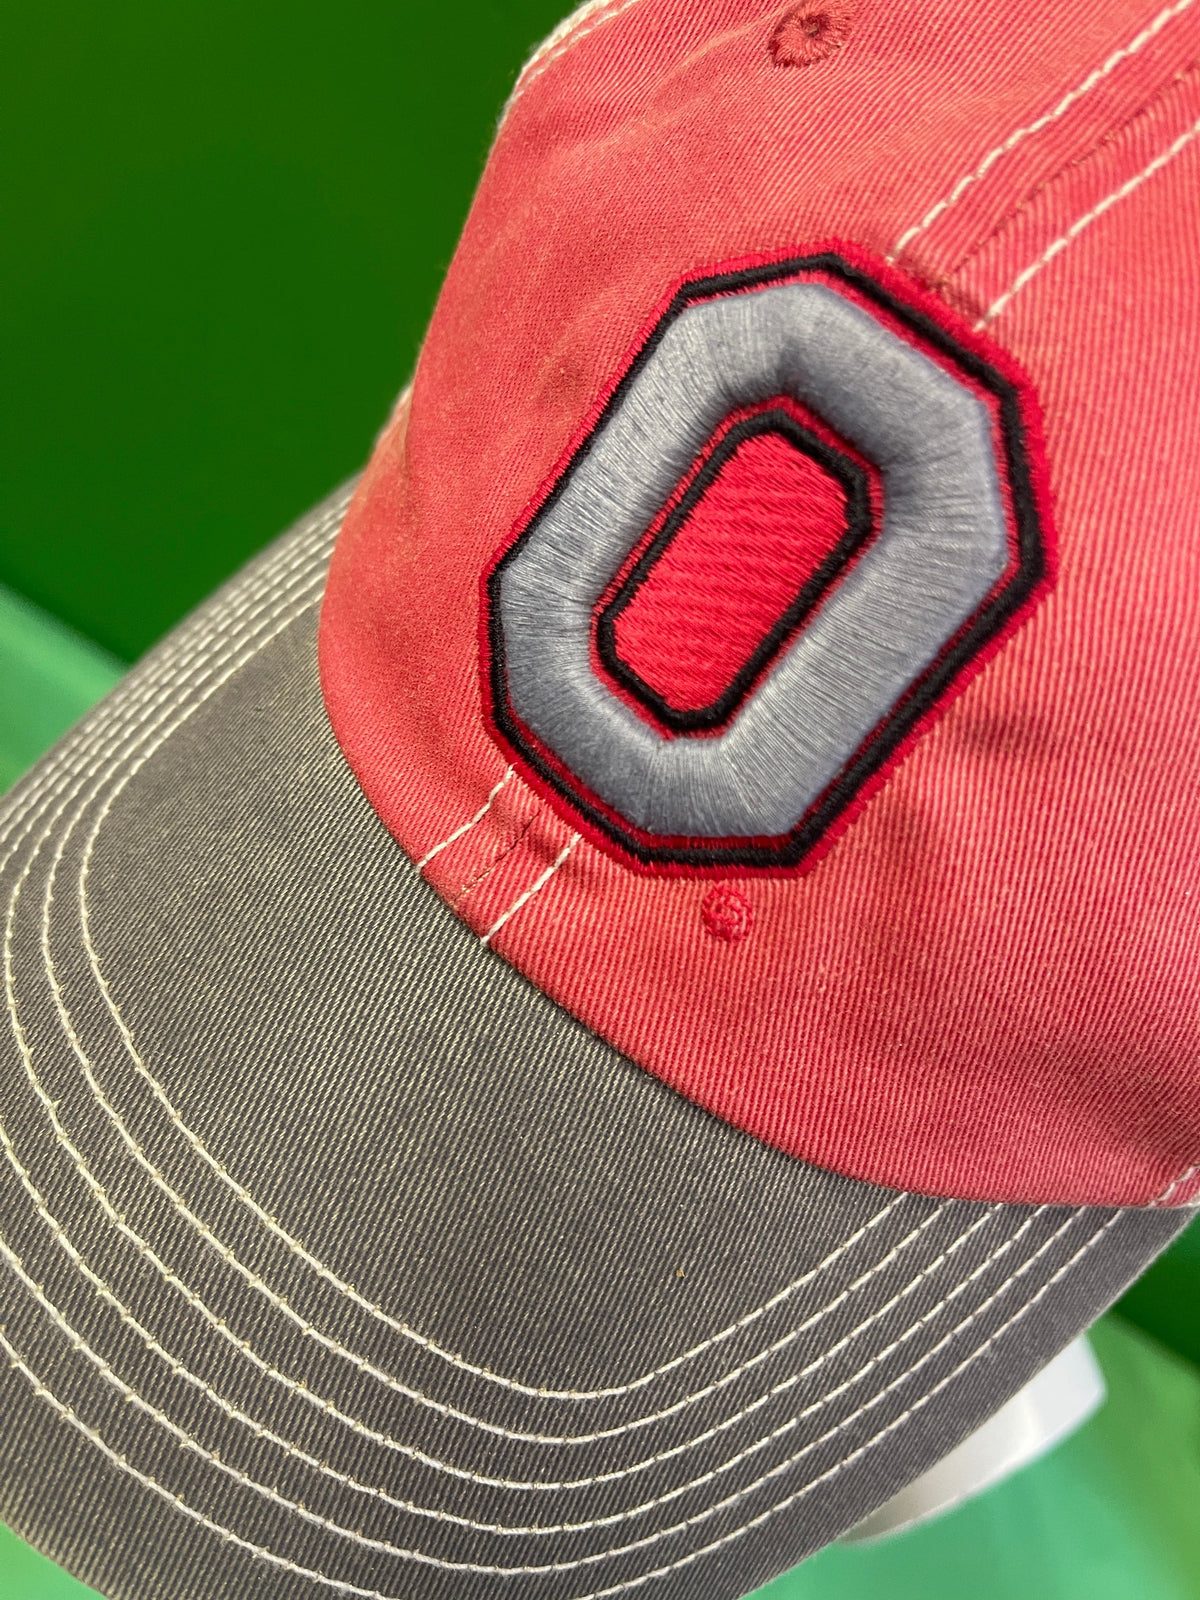 NCAA Ohio State Buckeyes Mesh Snapback Hat/Cap OSFM